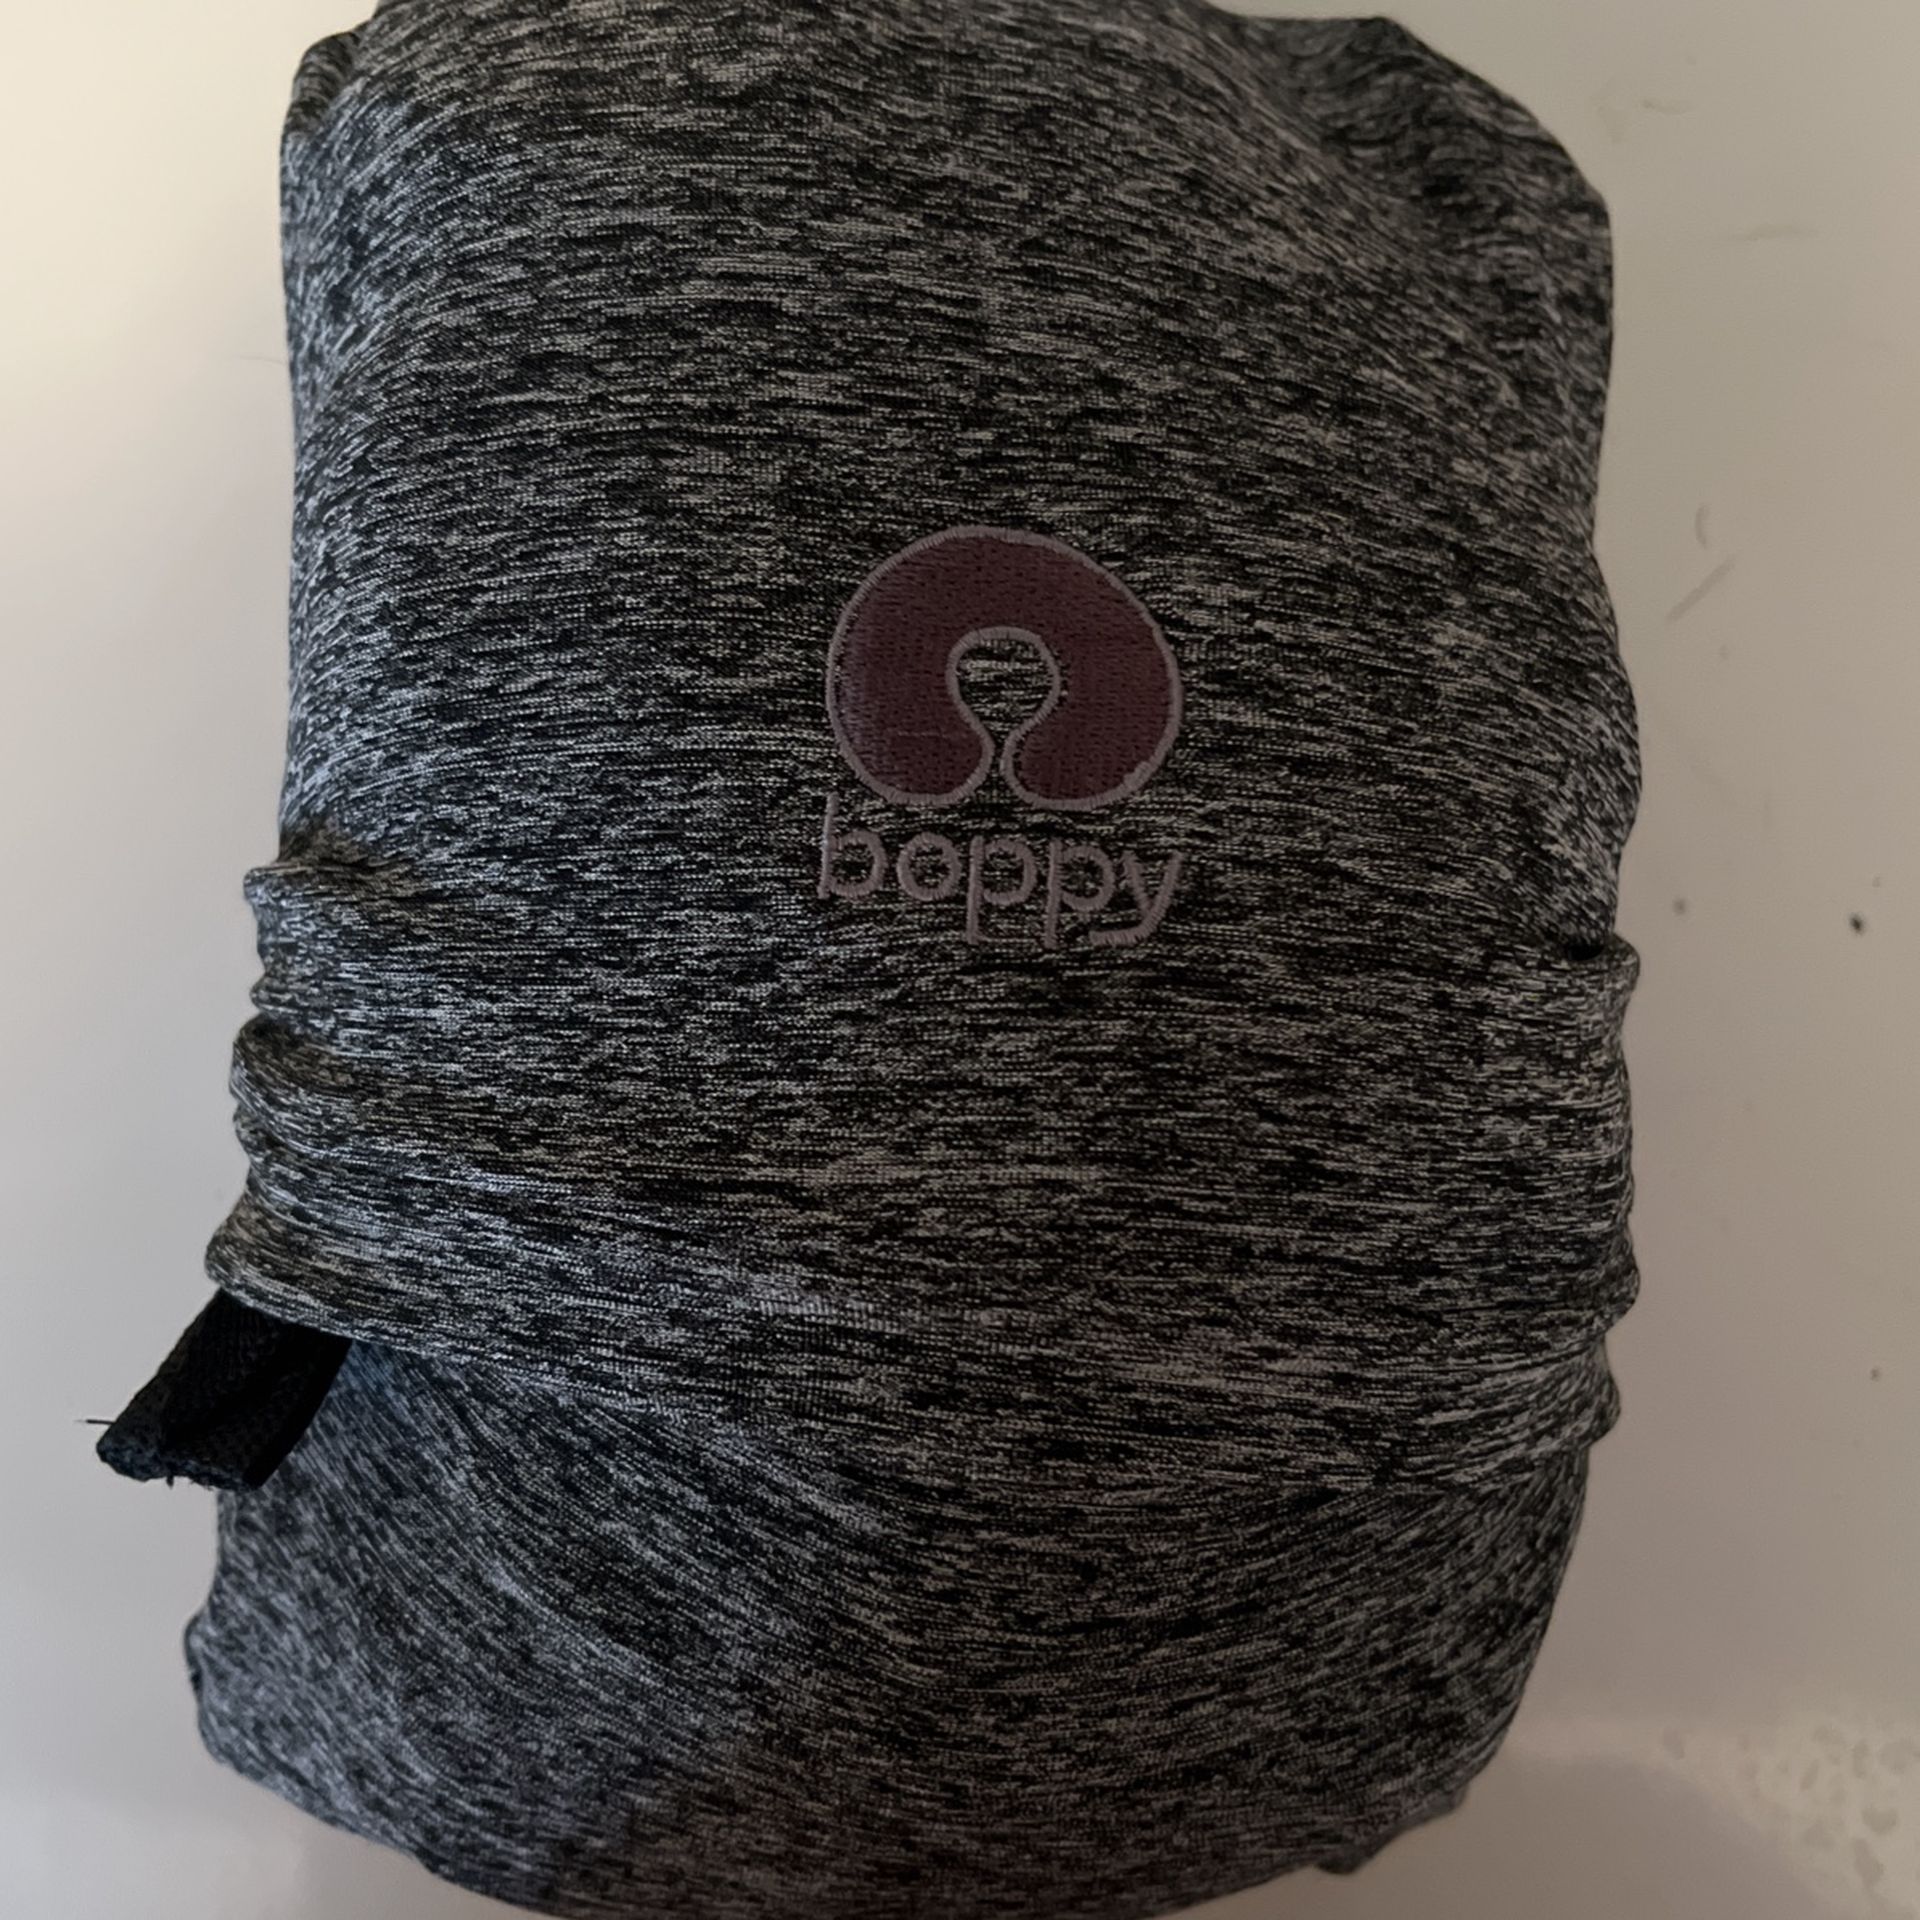 Hoppy ComfyFit Hybrid Baby Carrier 